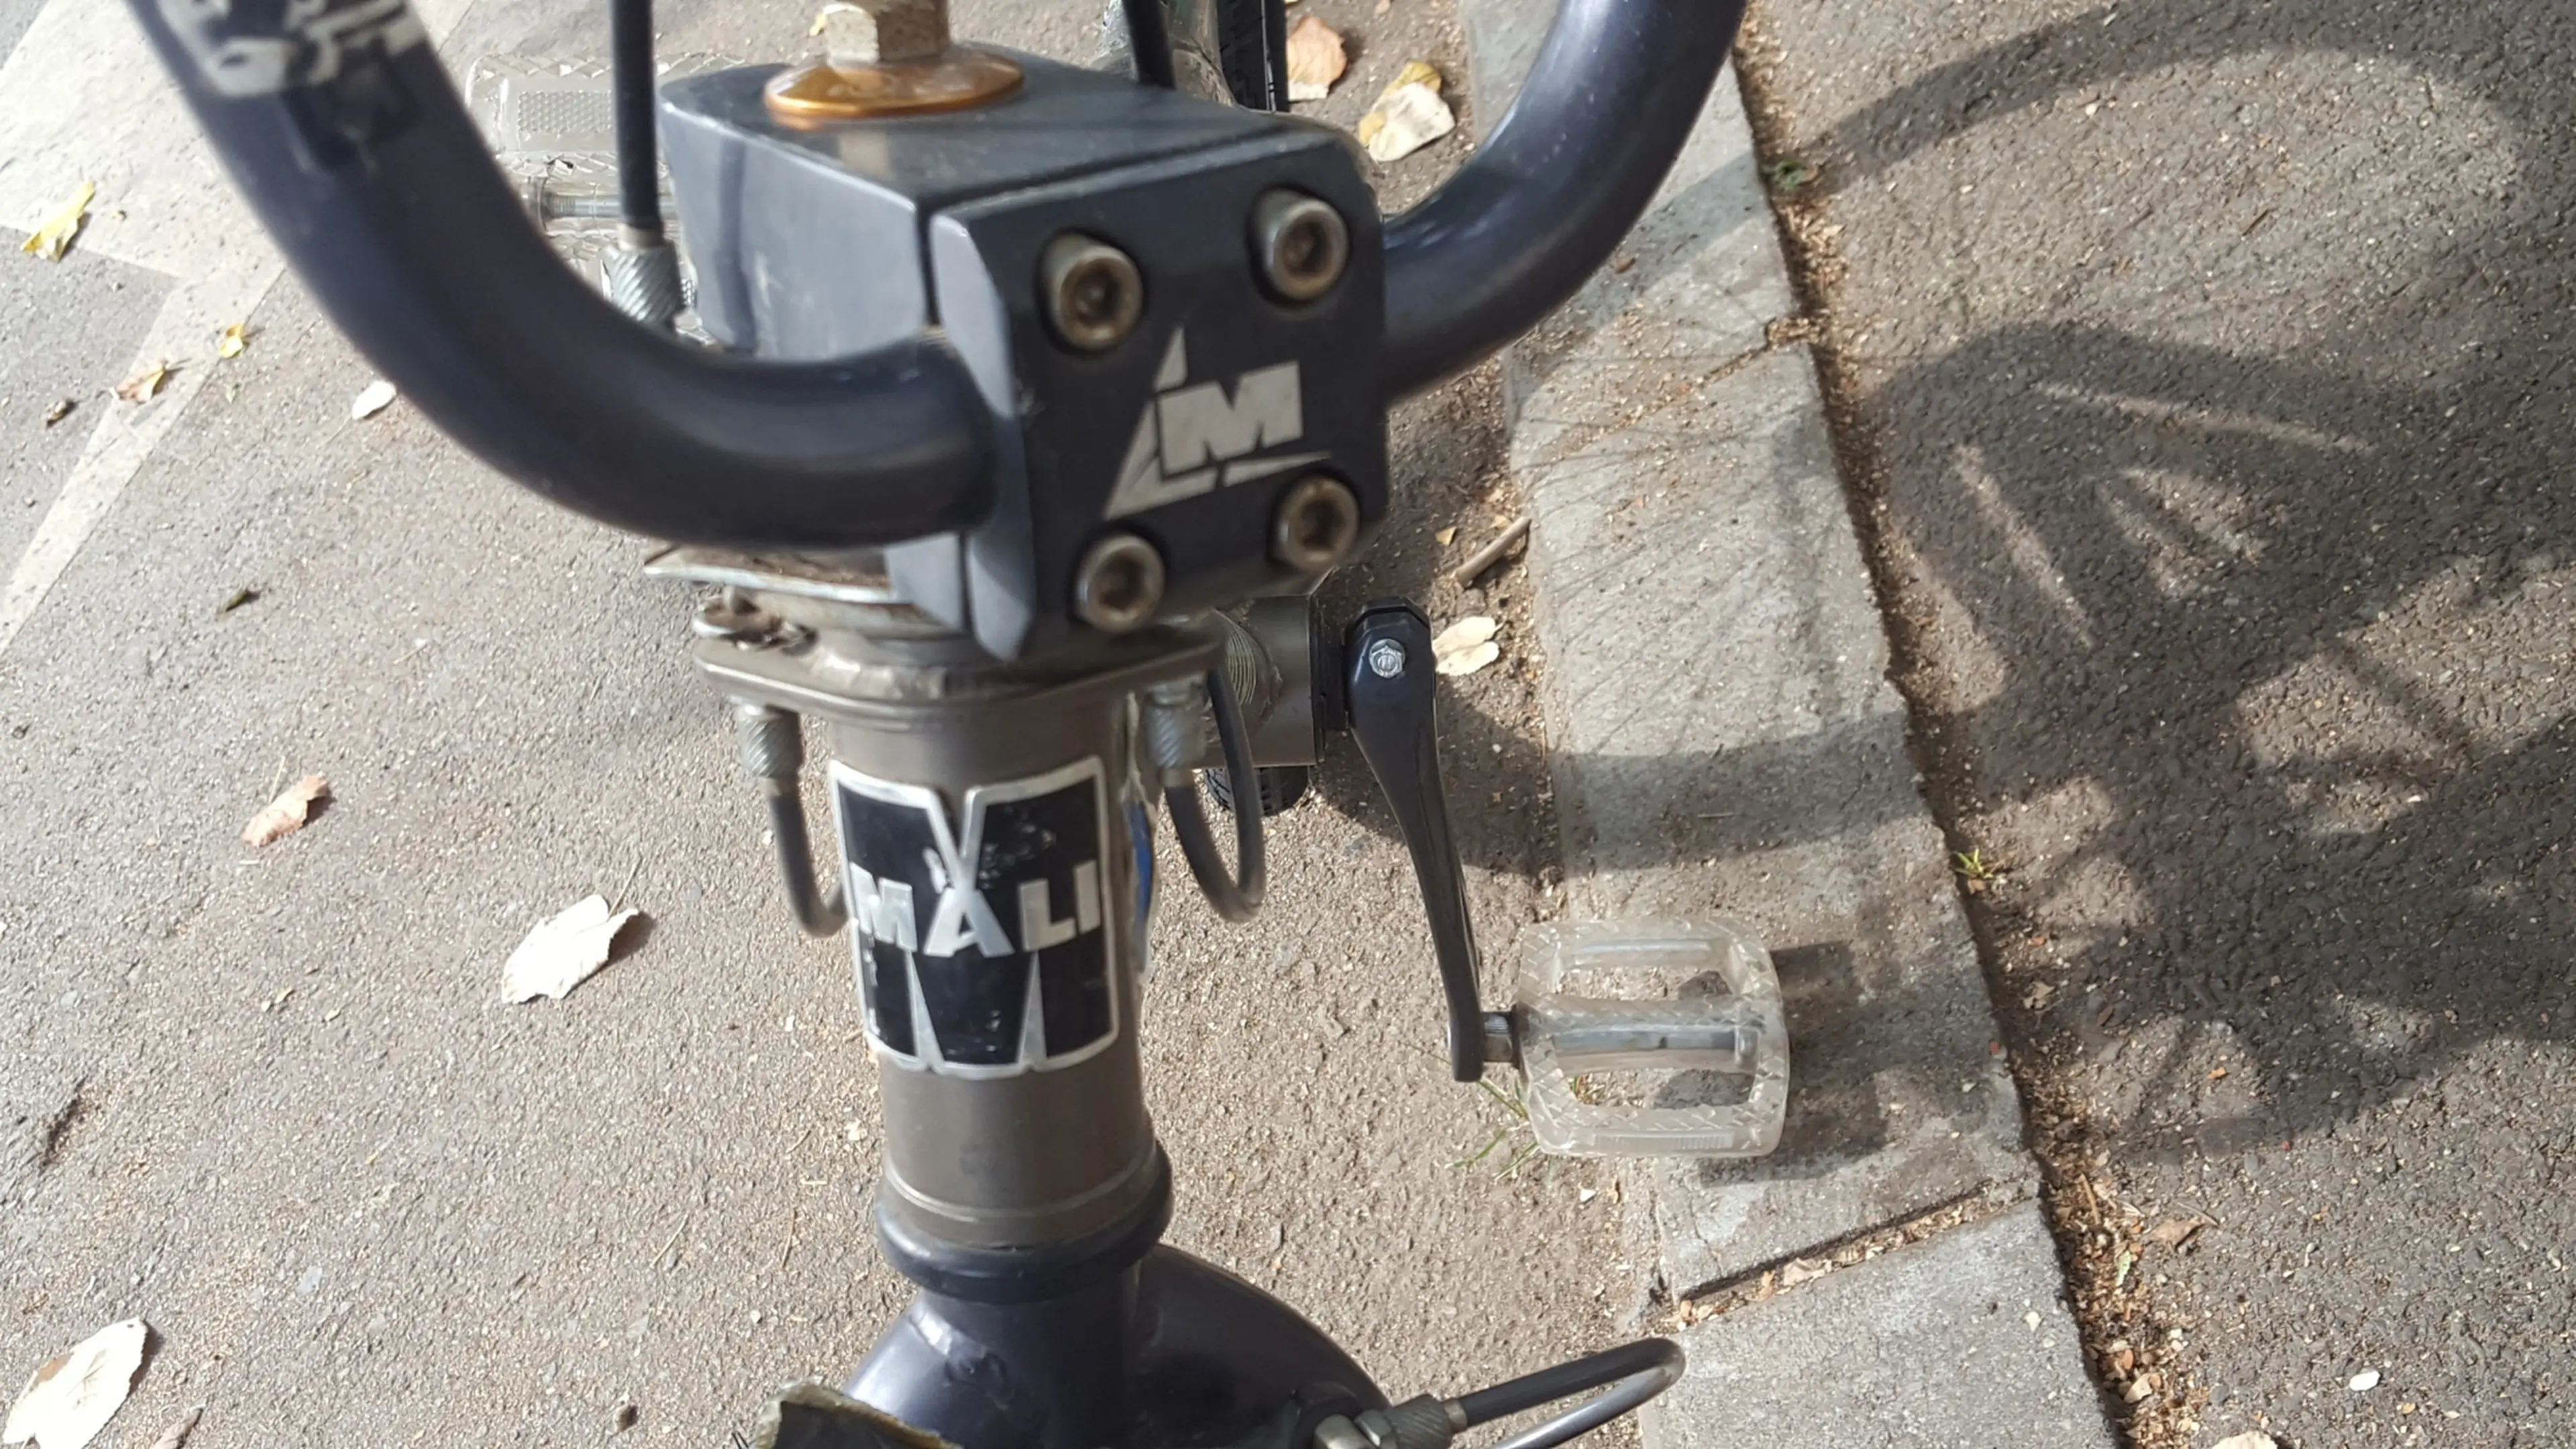 6. Bicicleta Bmx Mali